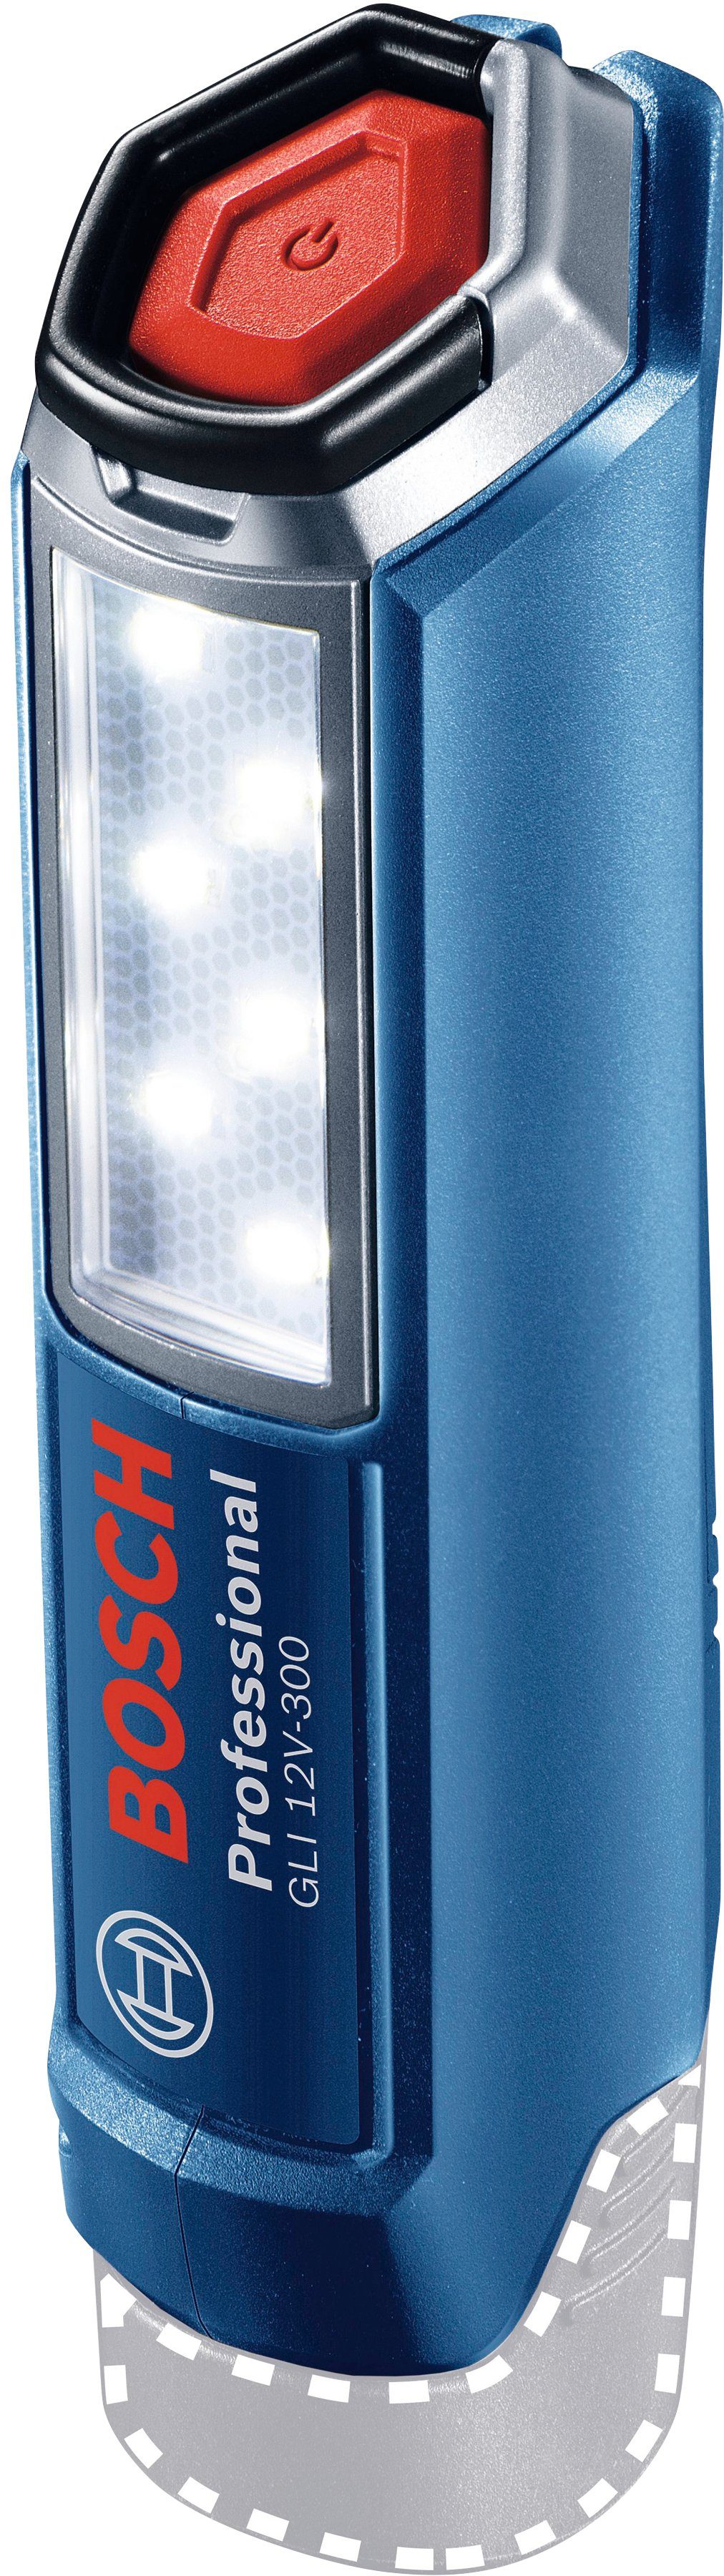 Bosch 12V-300, V, 300 Arbeitsleuchte Akku LED ohne Professional 12 integriert, GLI lm, fest LED